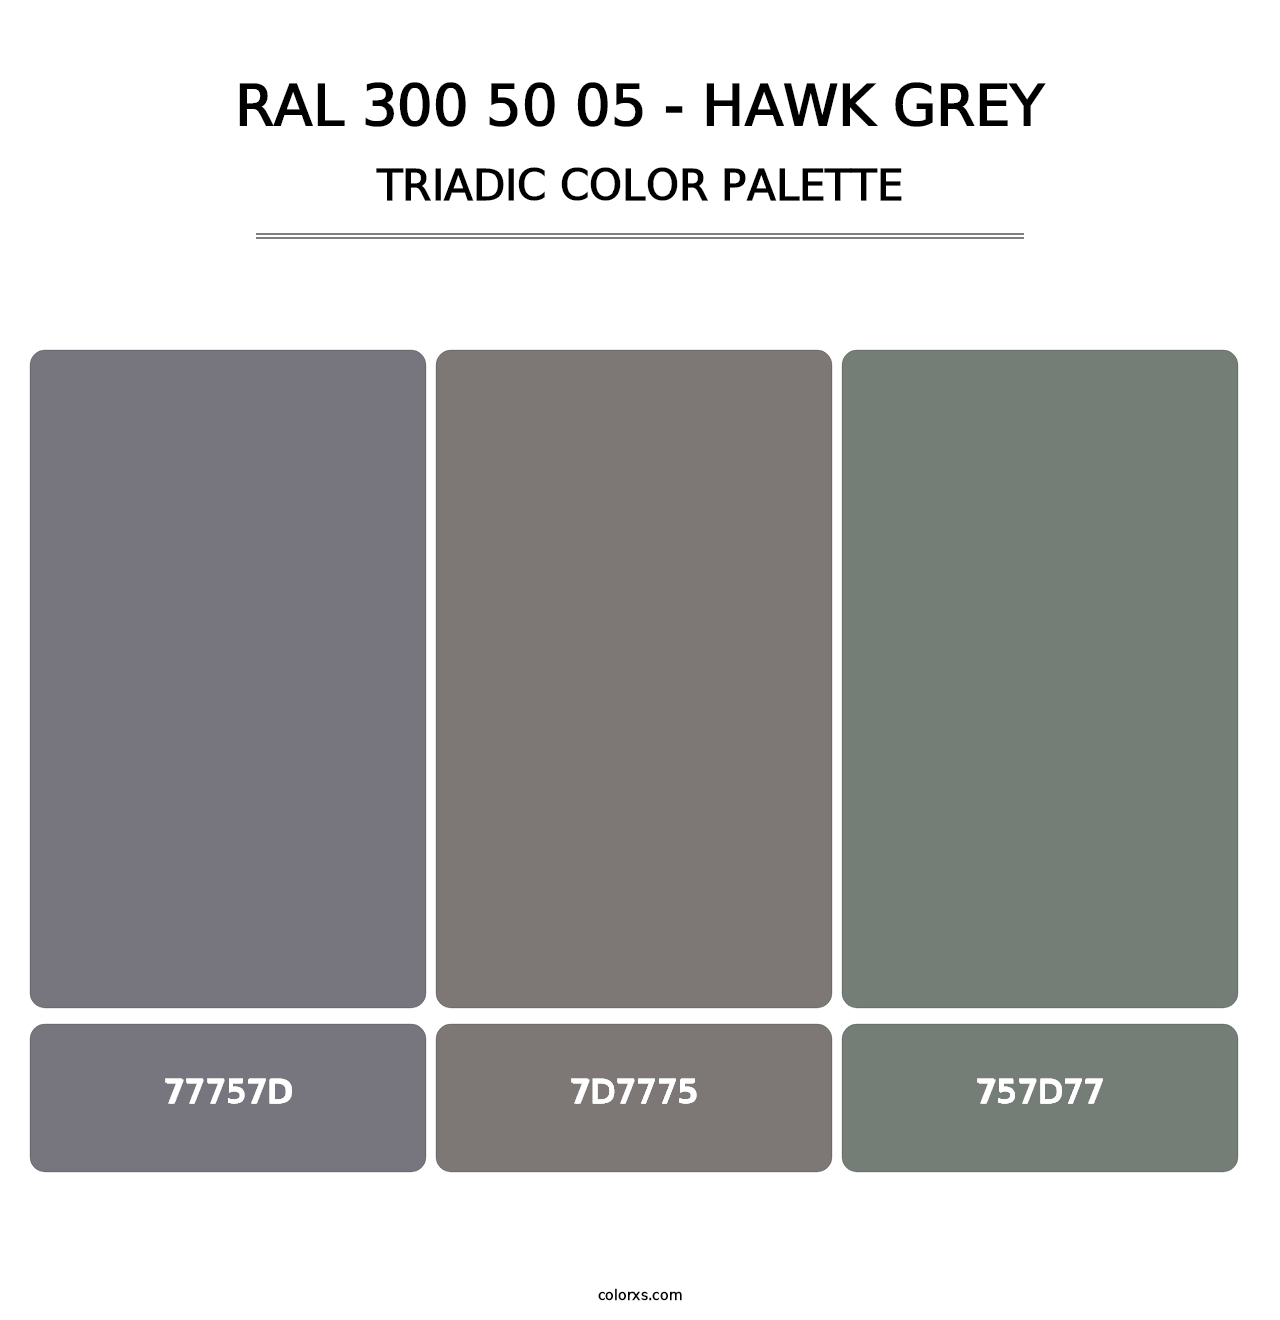 RAL 300 50 05 - Hawk Grey - Triadic Color Palette